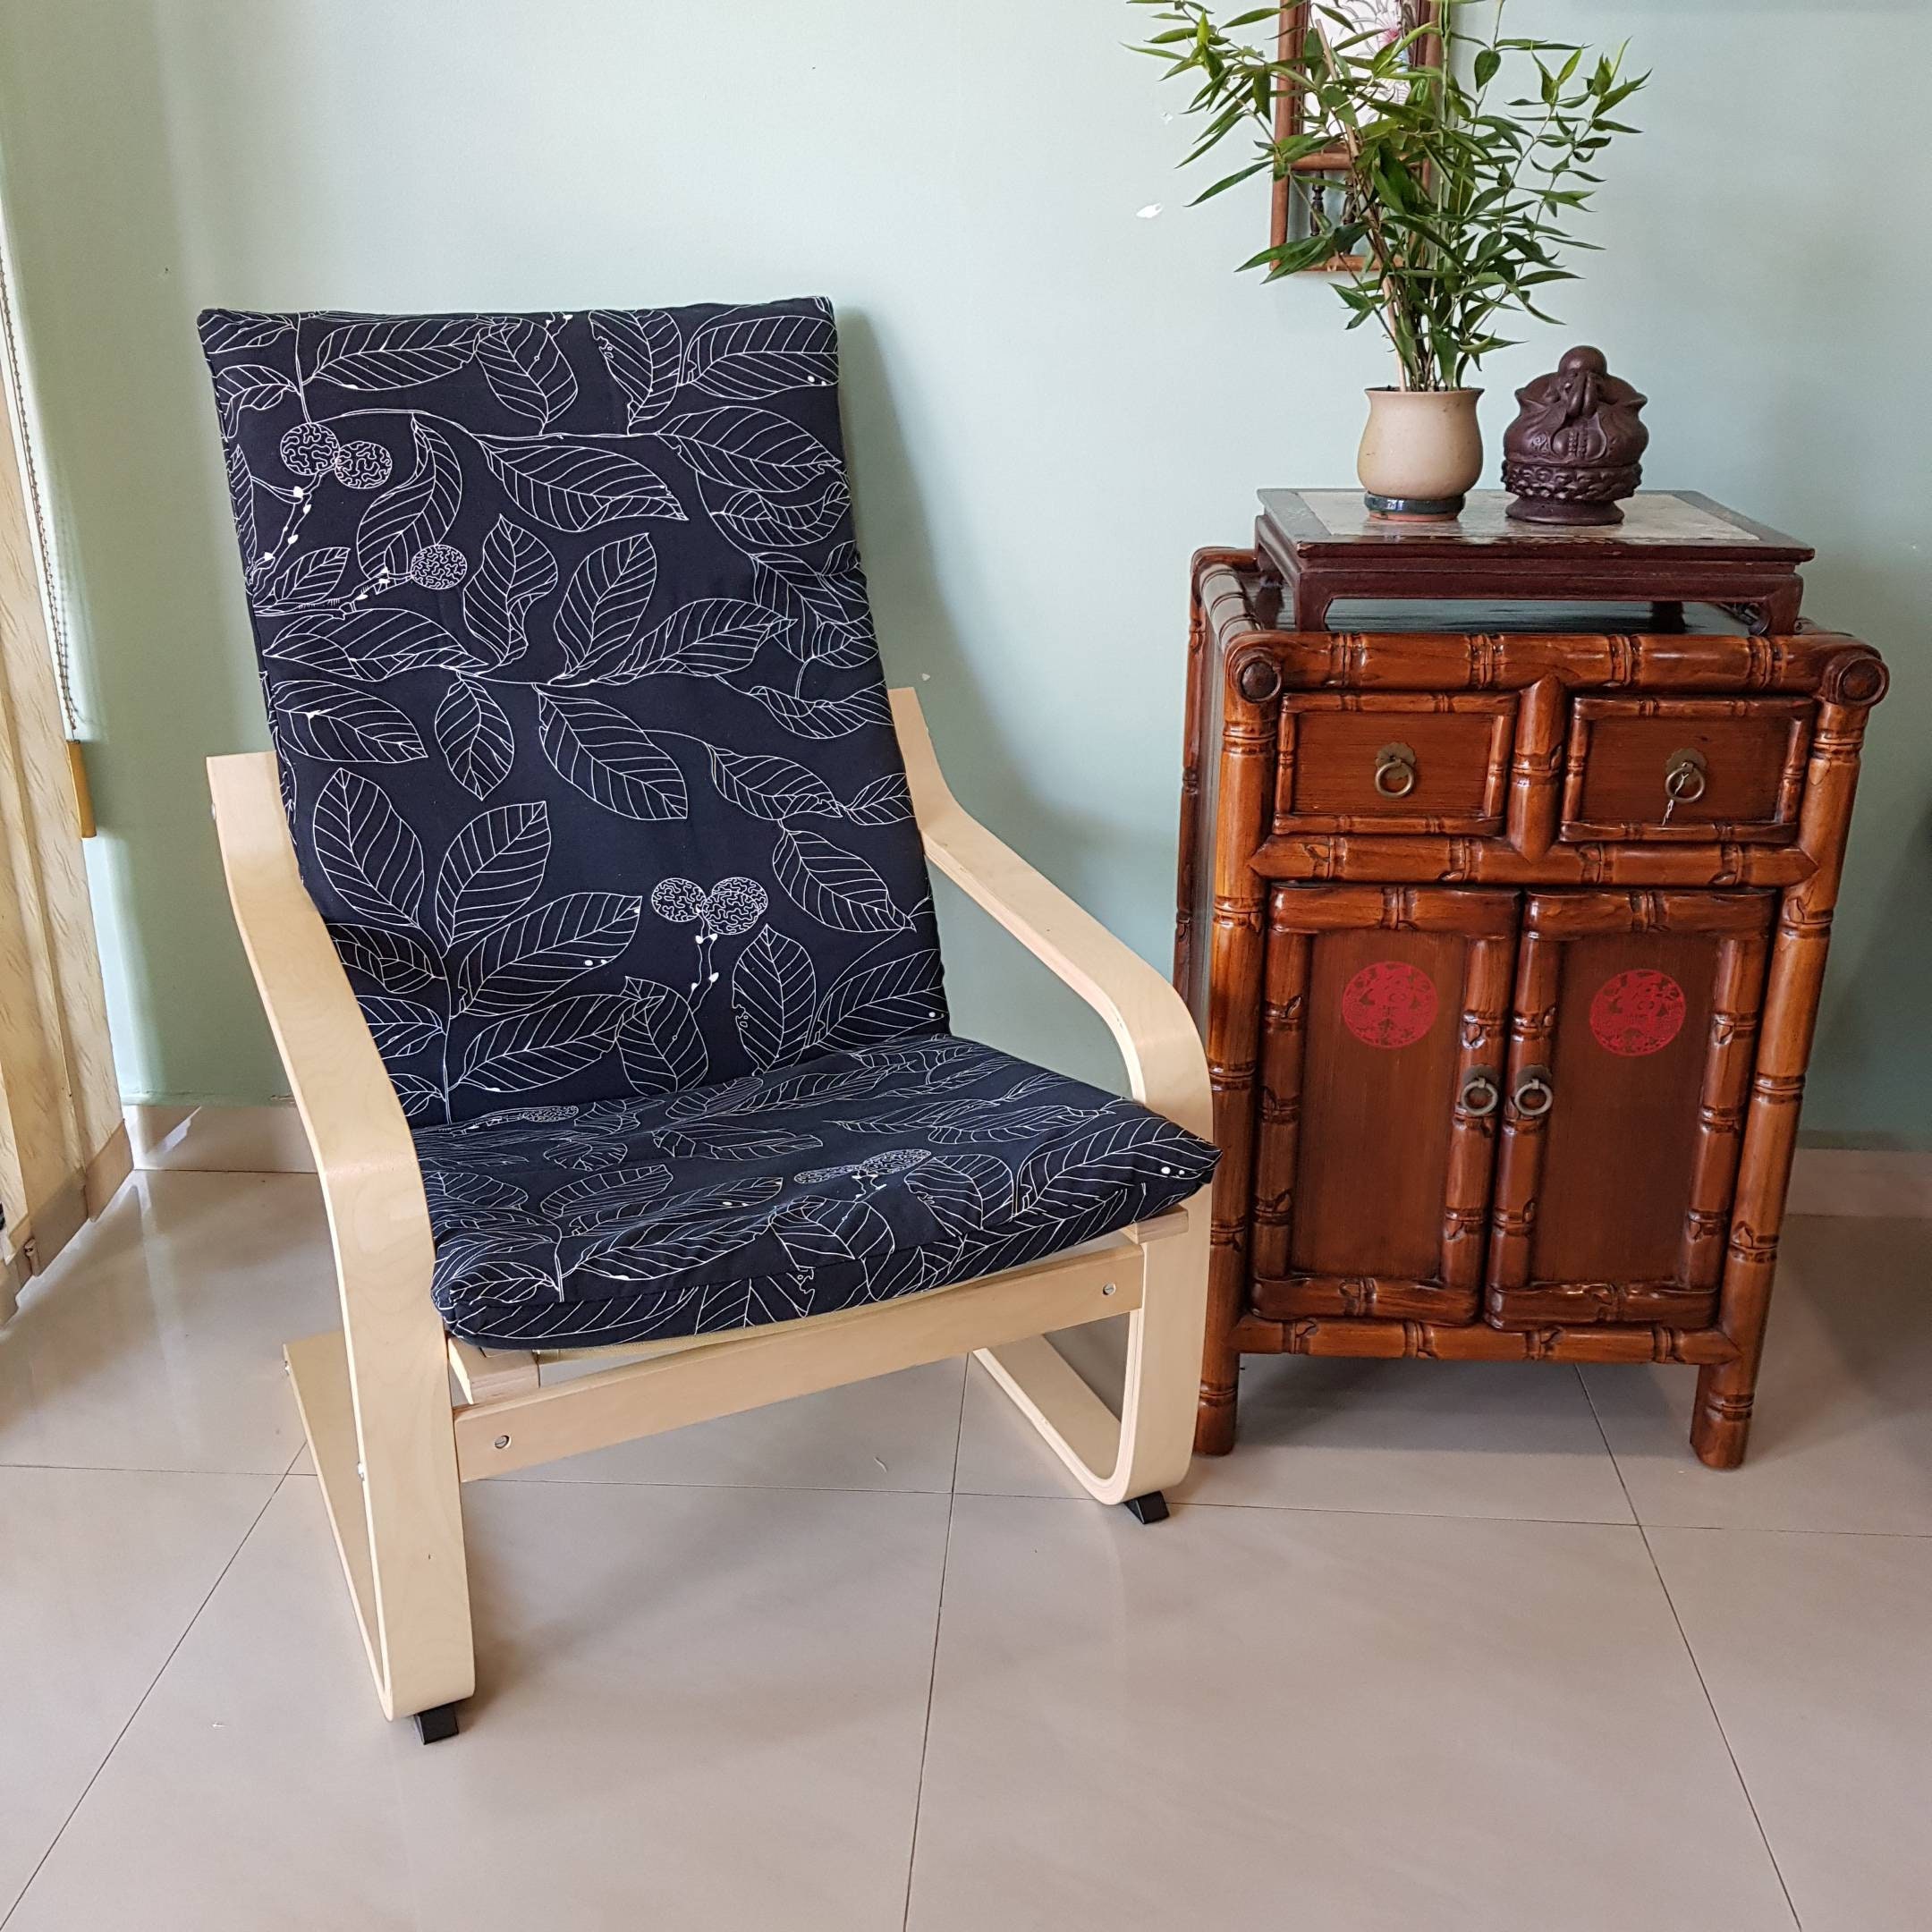 IKEA Poang Chair Cushion Cover Black Leaf Print | Etsy